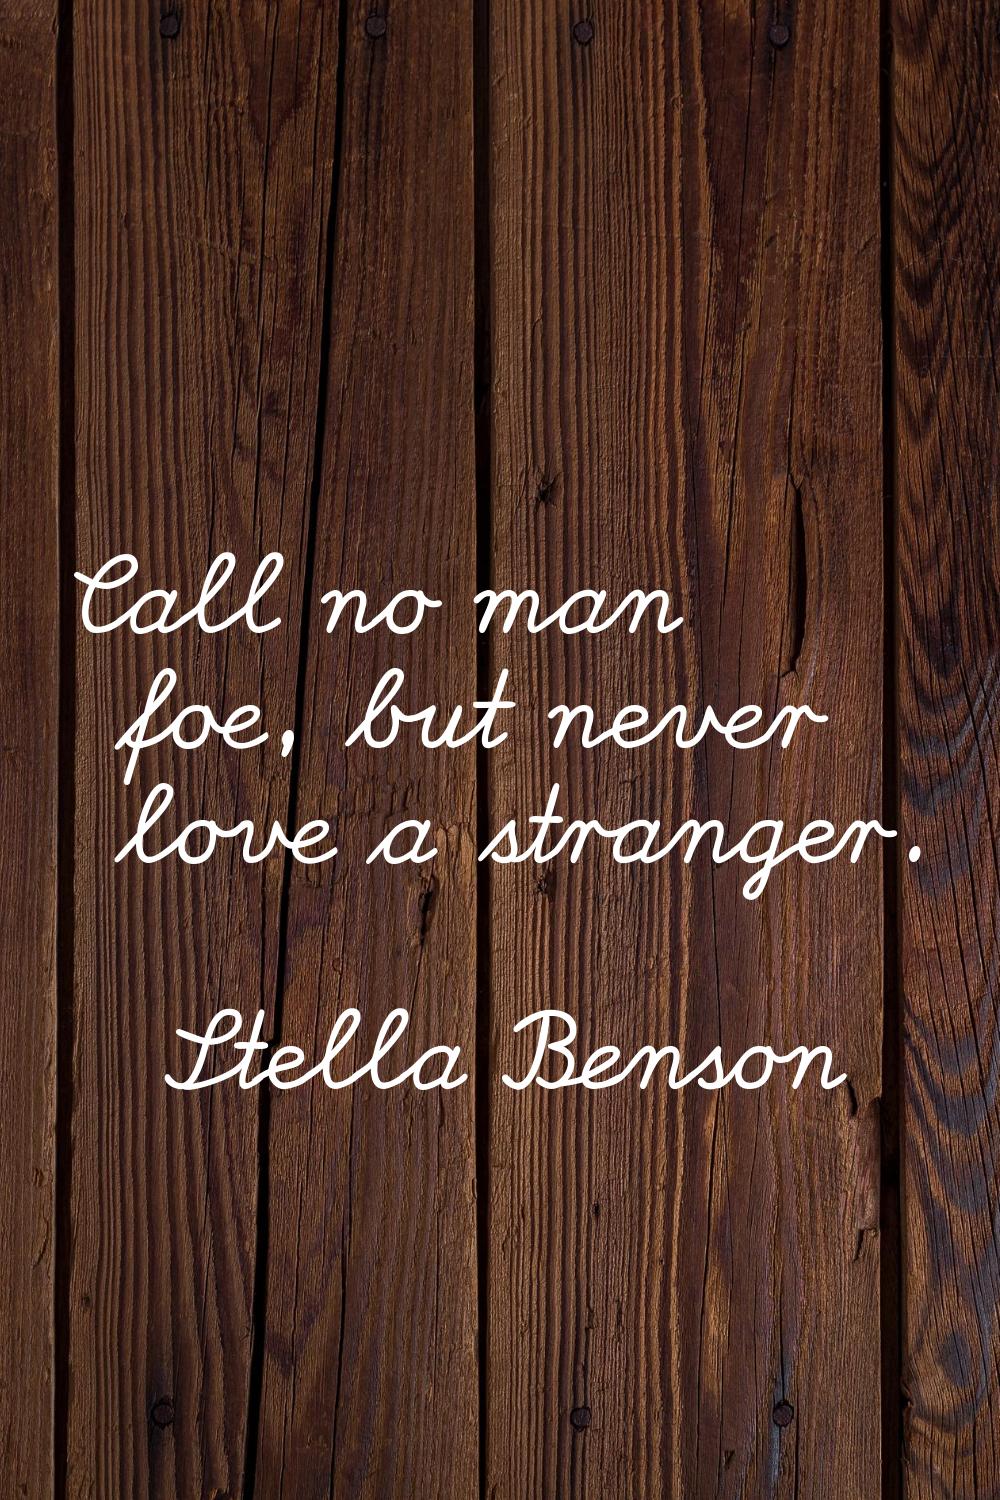 Call no man foe, but never love a stranger.